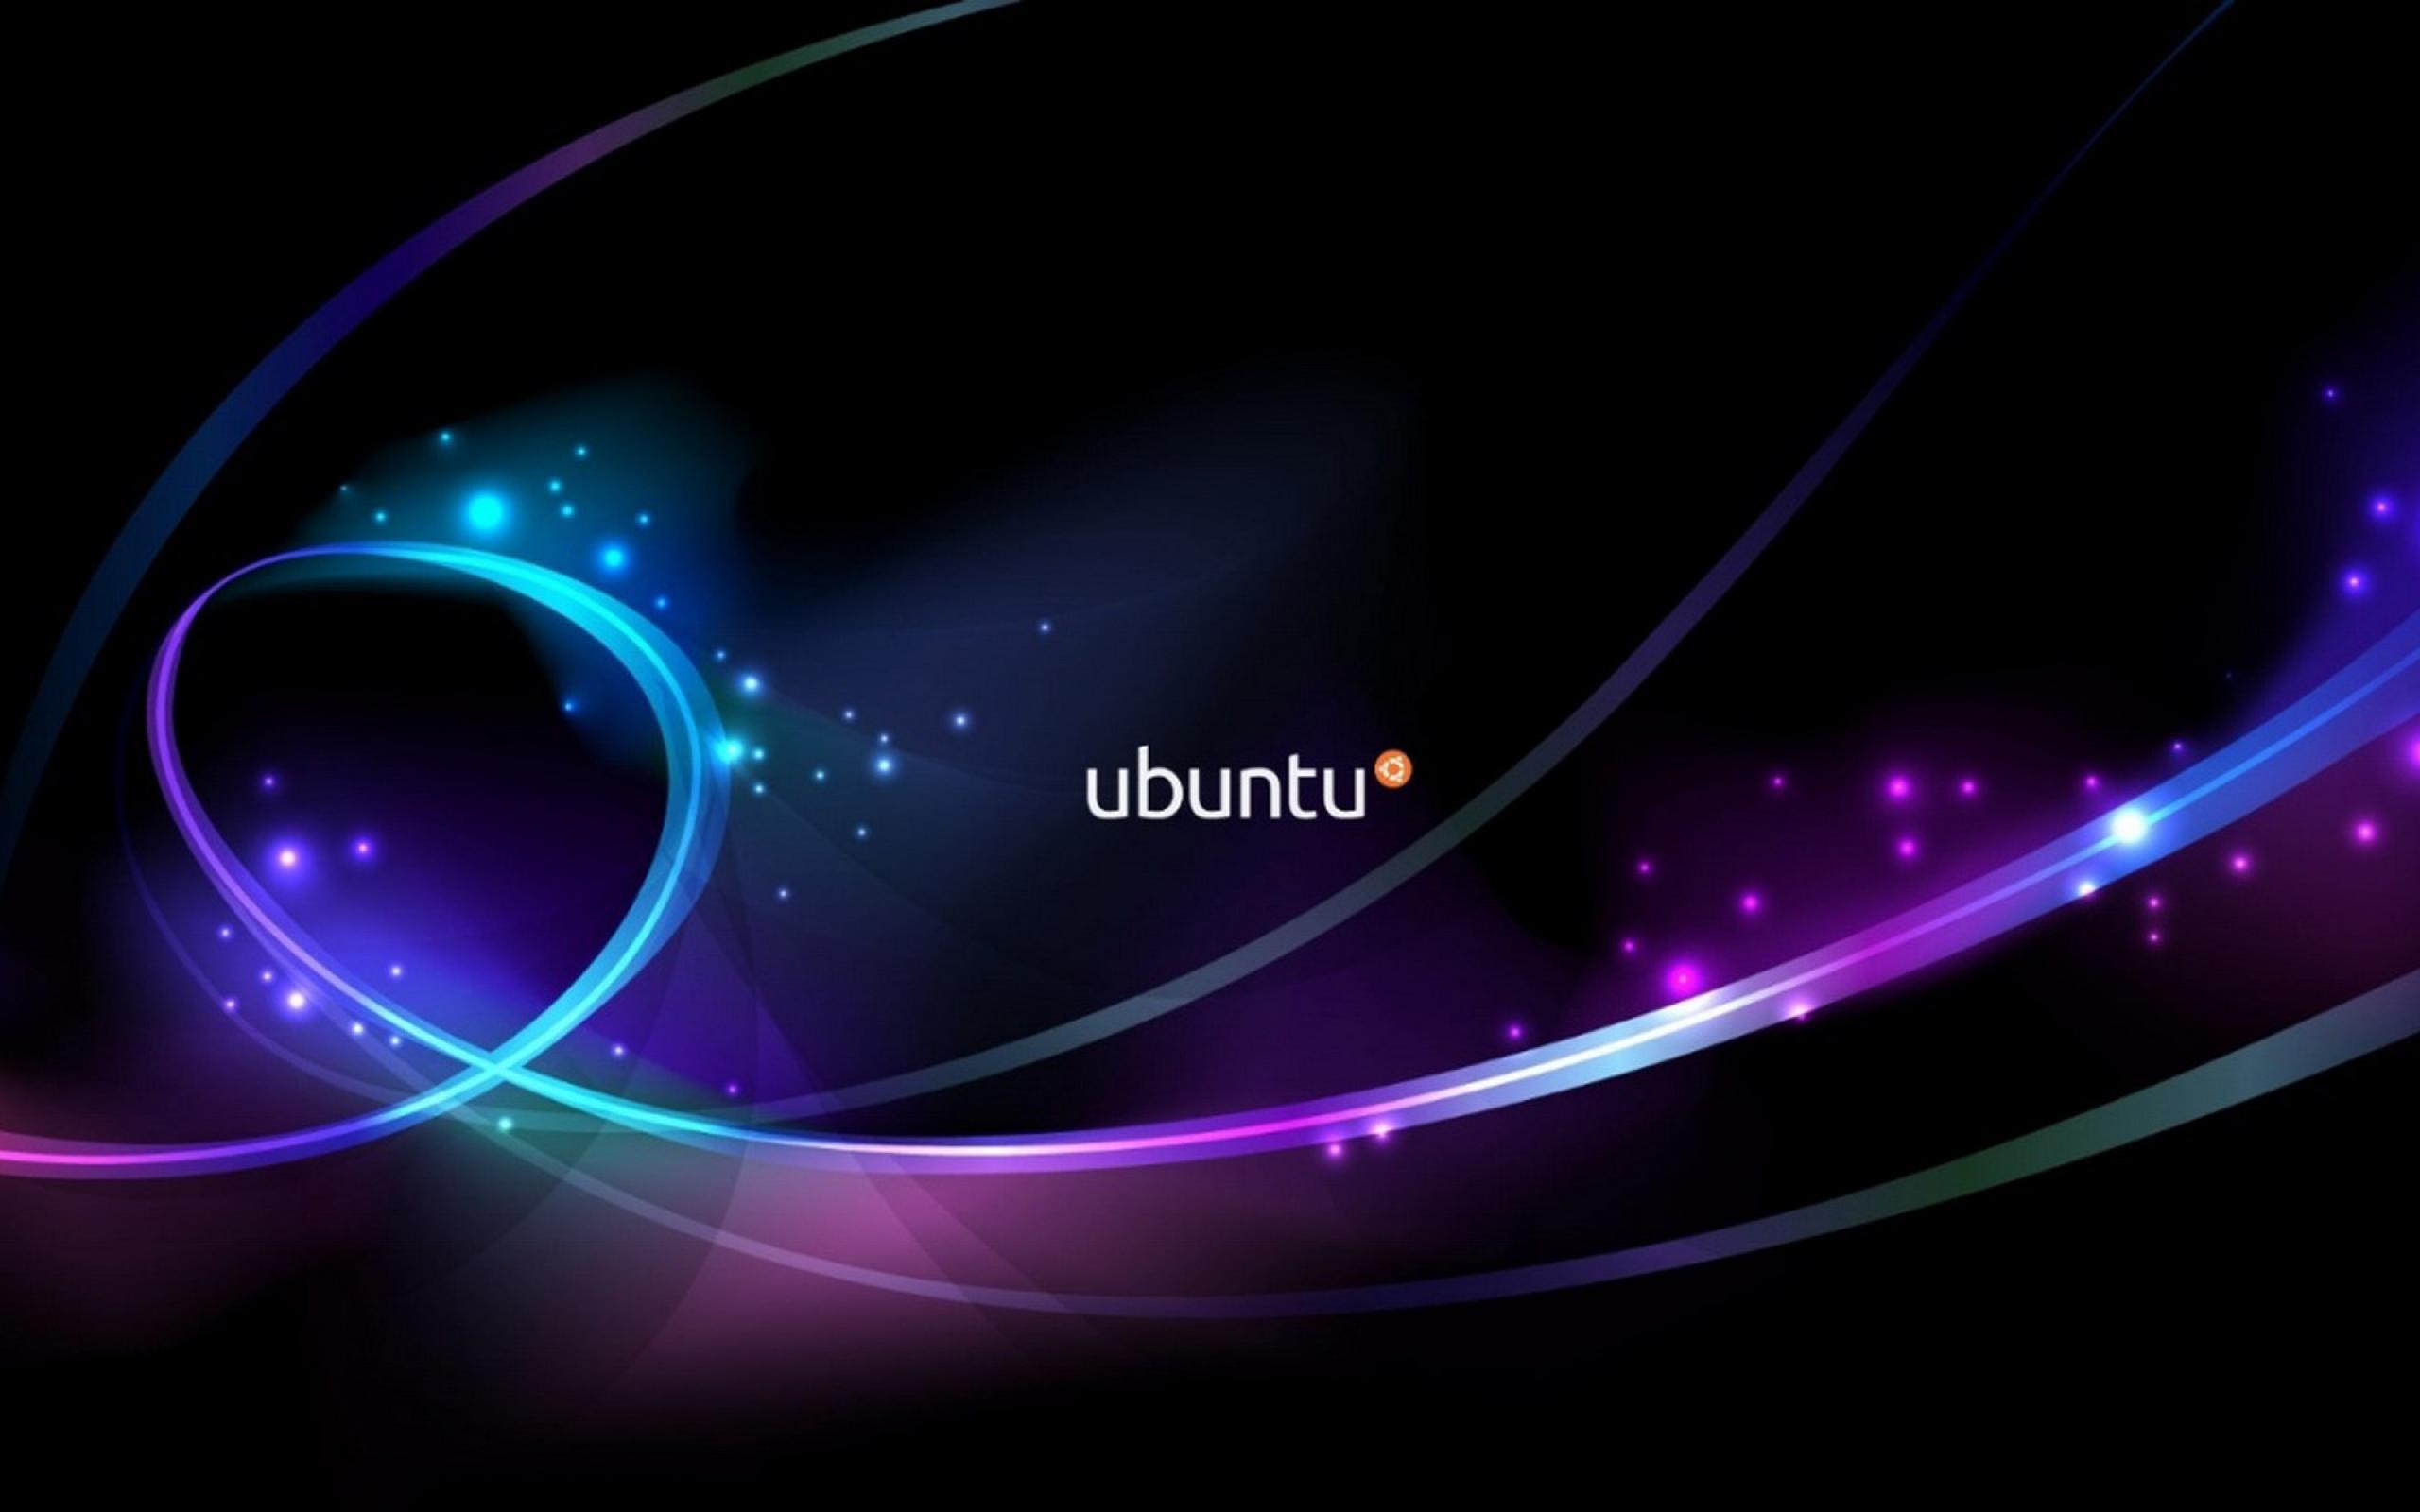 Ubuntu Hd Wallpapers Top Free Ubuntu Hd Backgrounds Wallpaperaccess